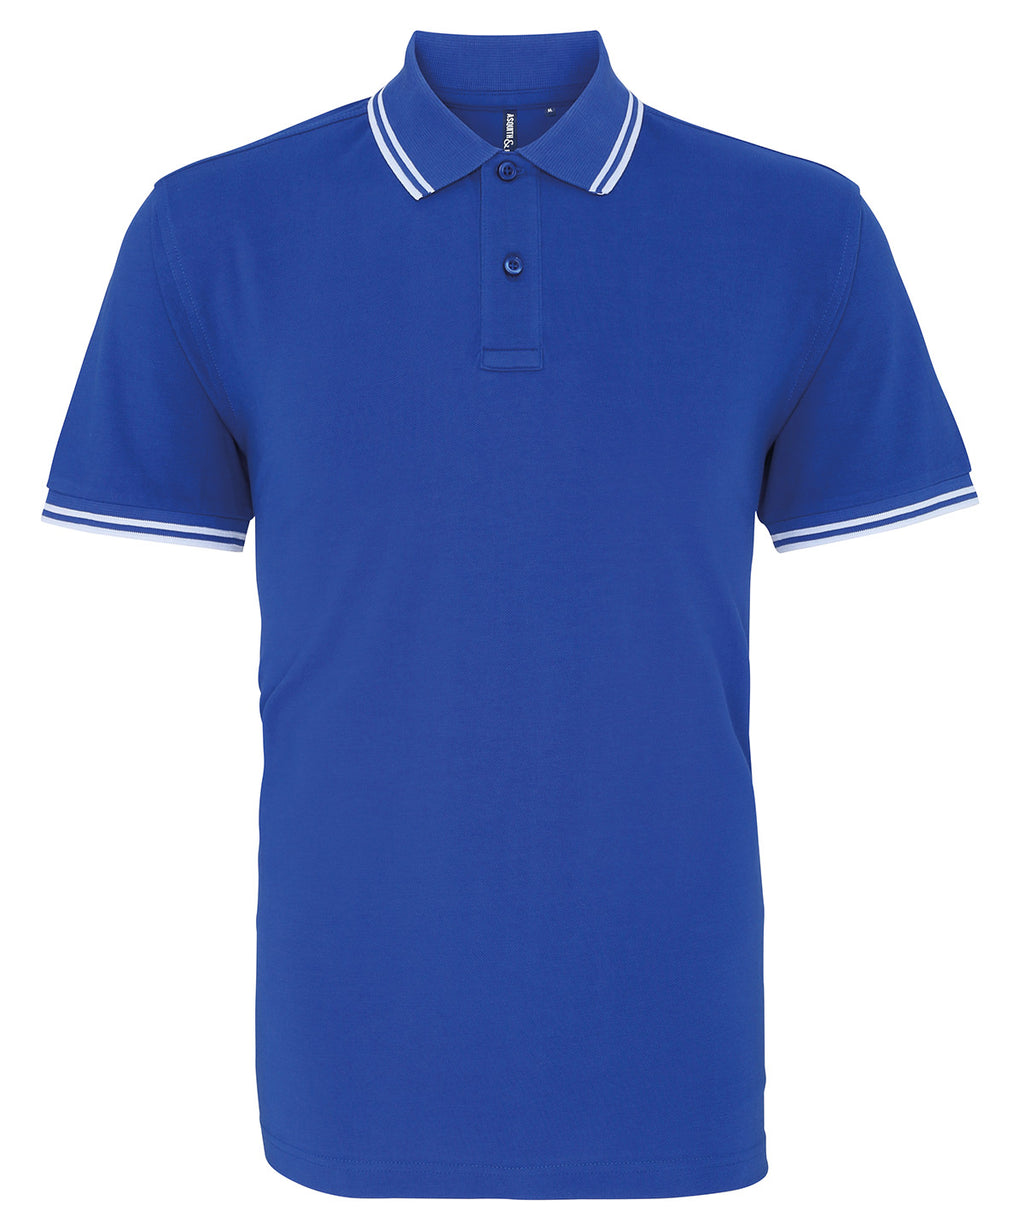 Mens Tipped Short Sleeve Polo Shirt - Royal Blue/White